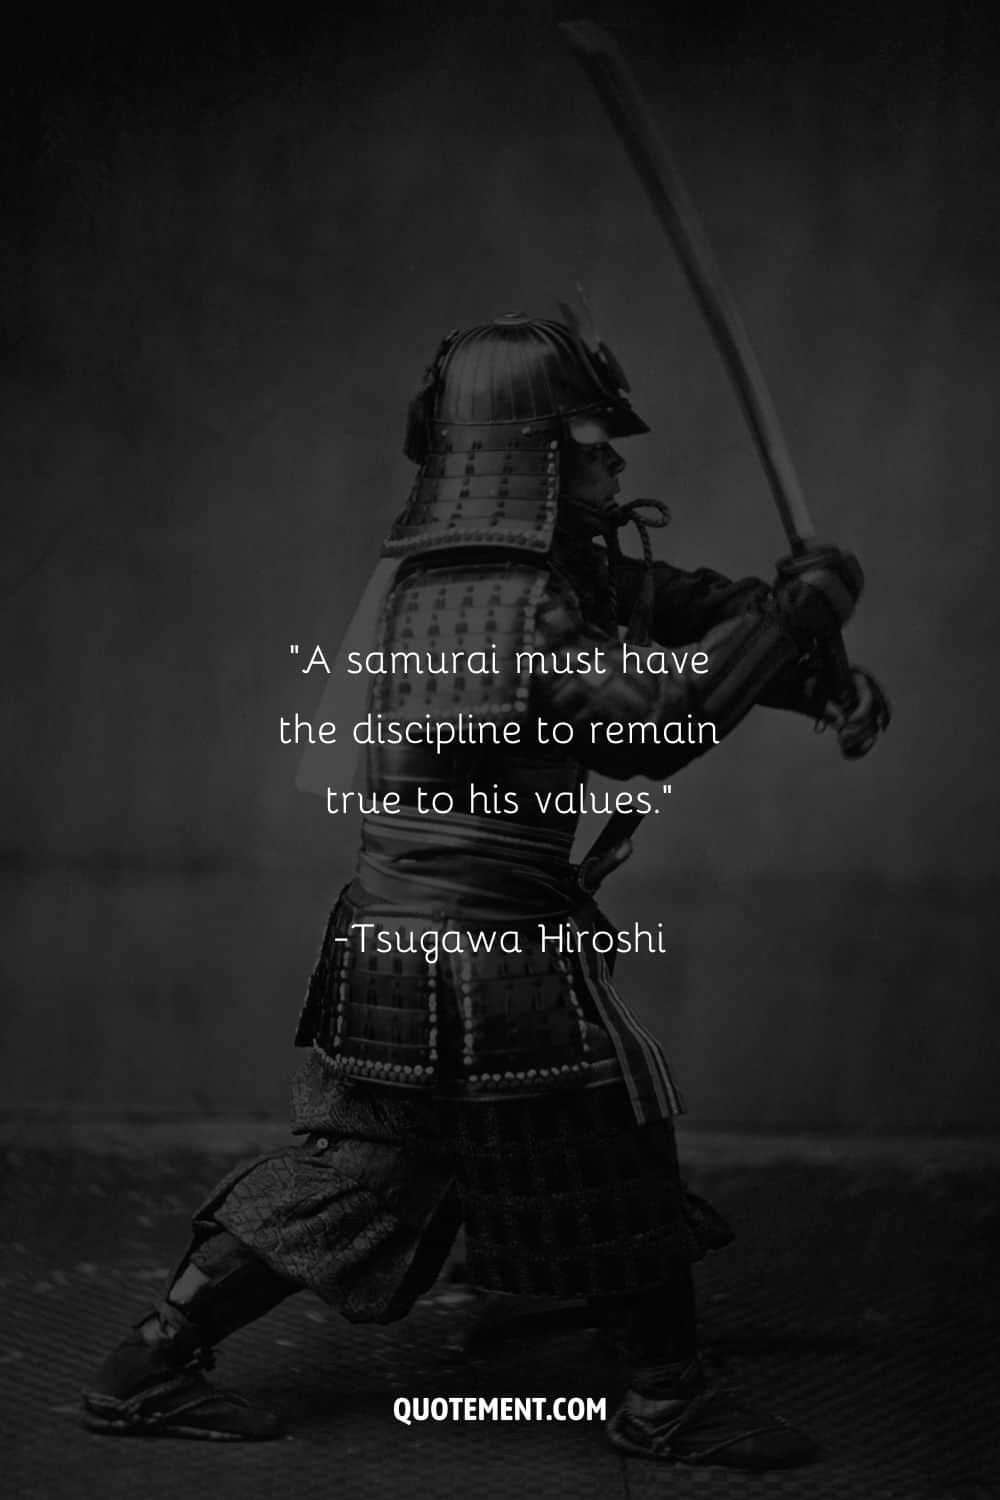 Elegant swordplay by a formidable samurai representing samurai phrase